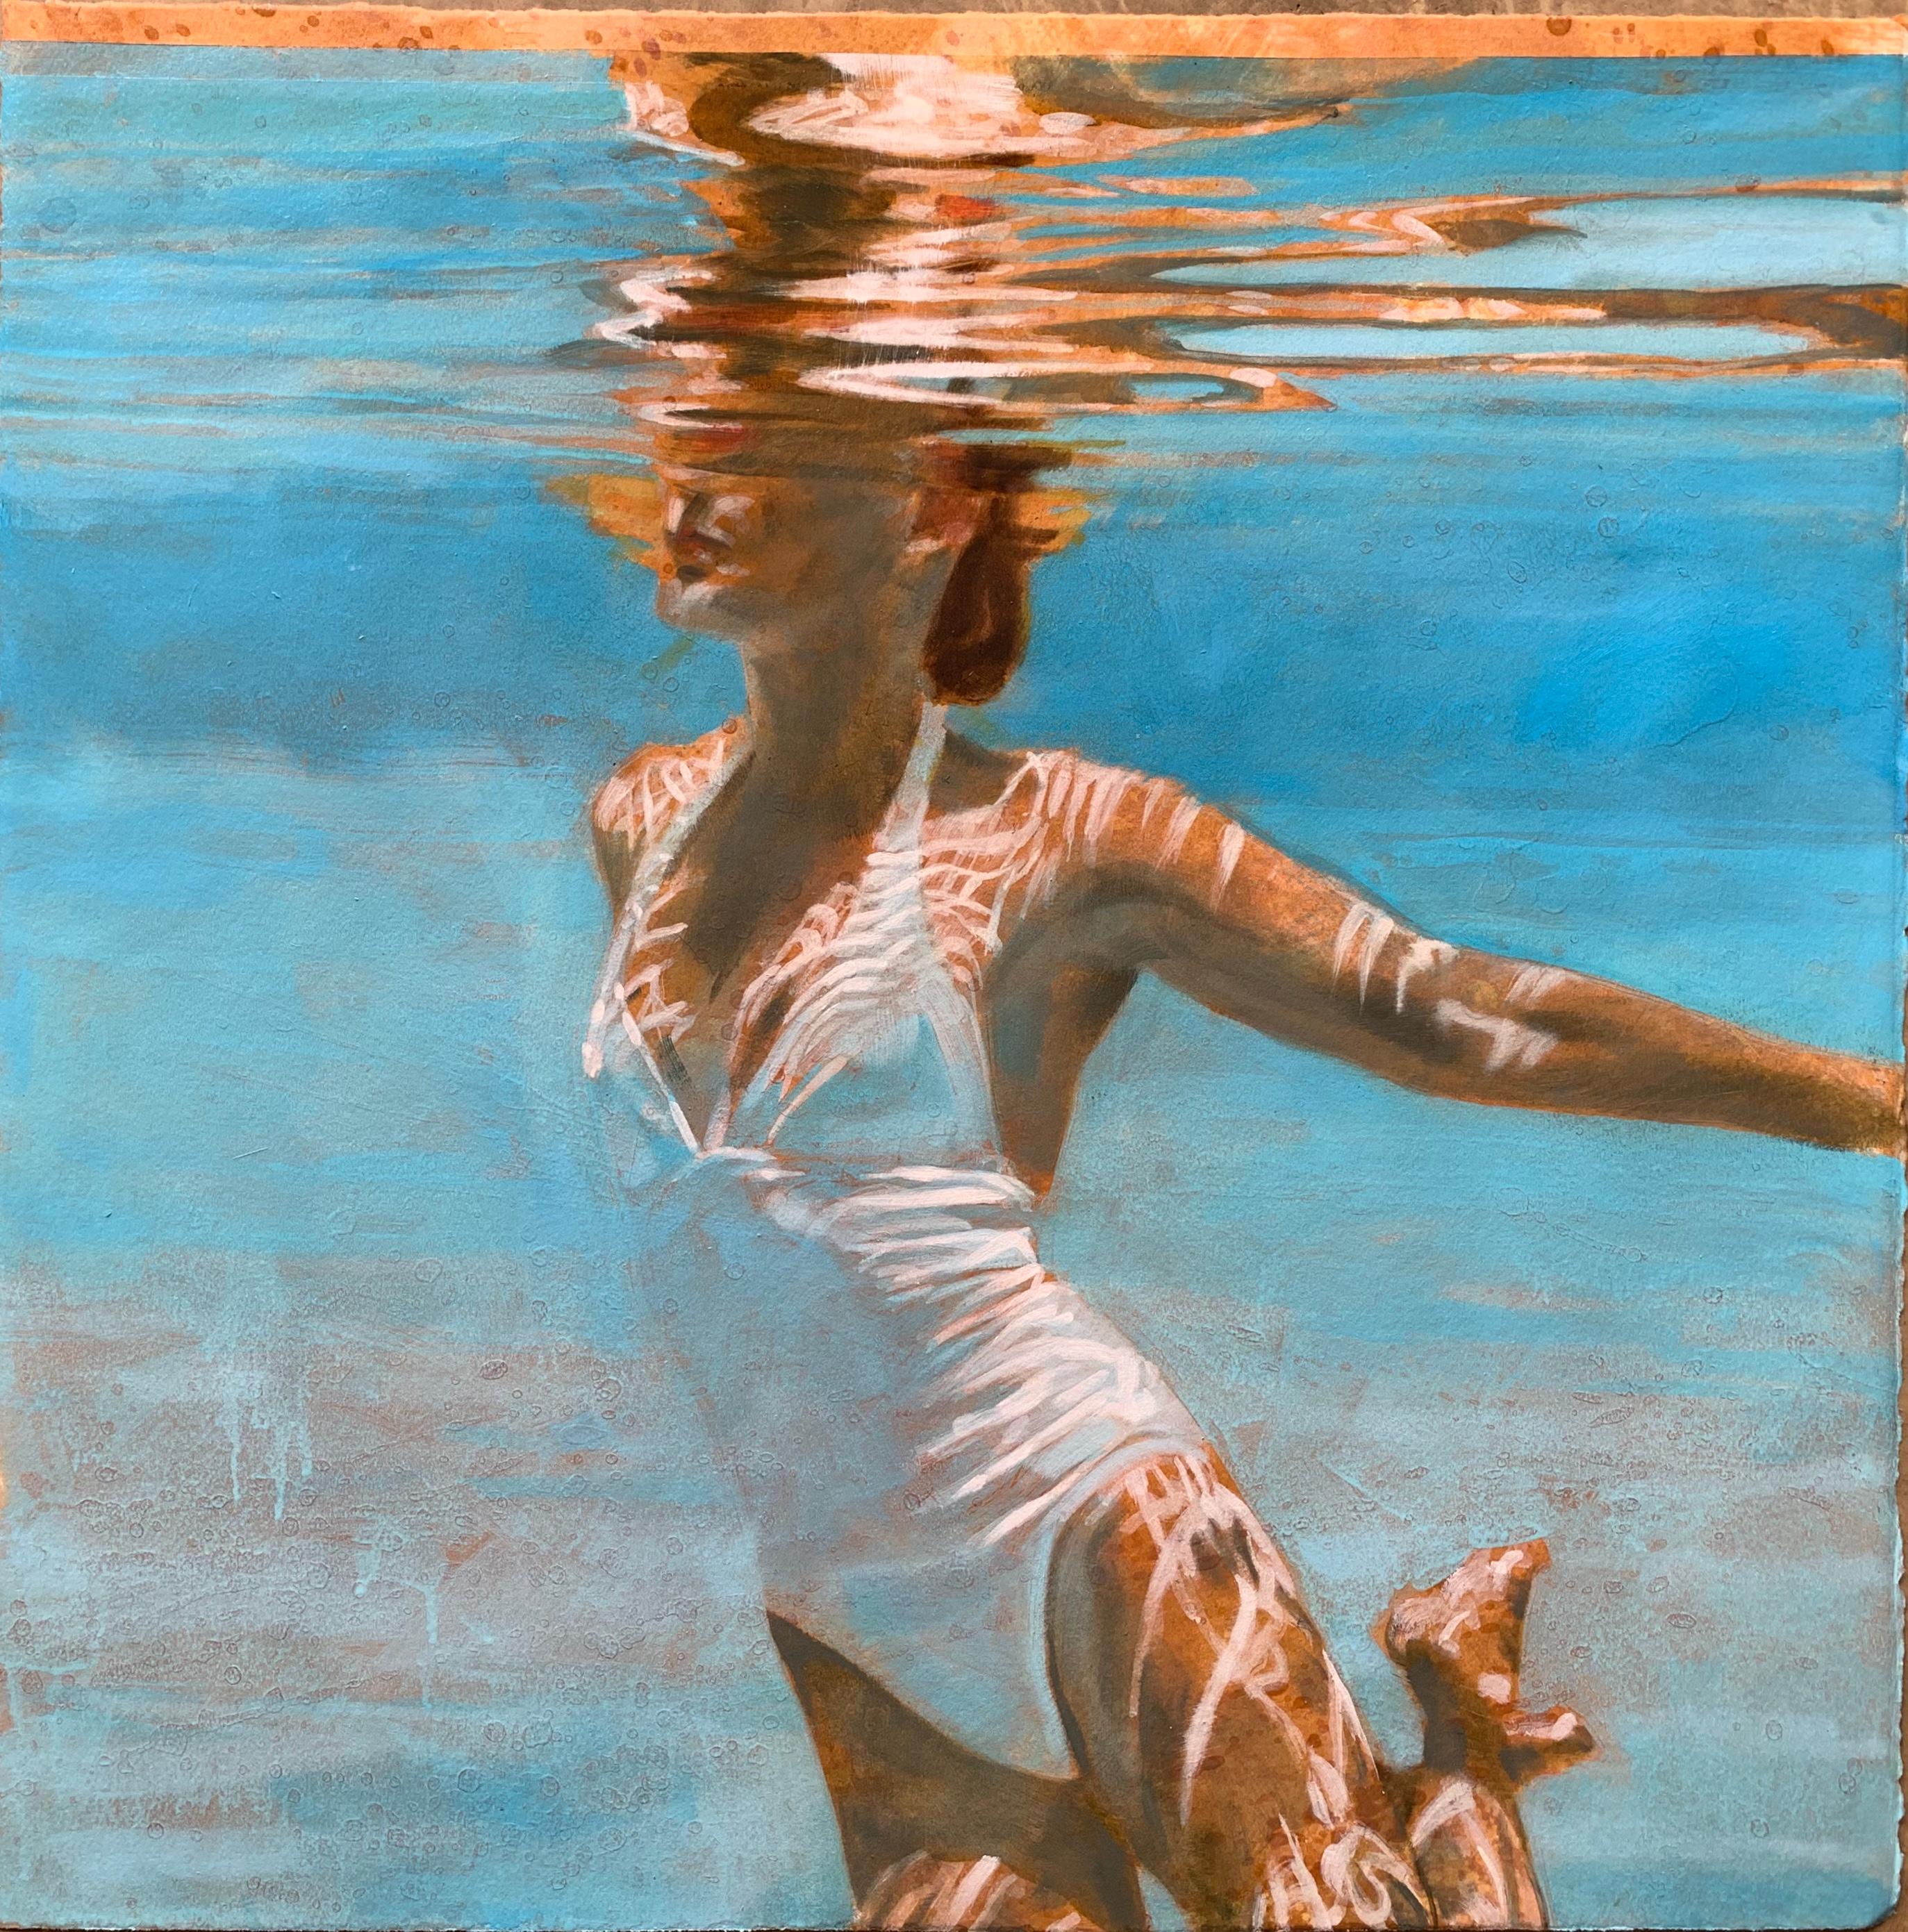 Carol Bennett Landscape Painting - Titanium Reflect, Swimmer, Water, White Swimsuit, Work on Paper,  Female Figure